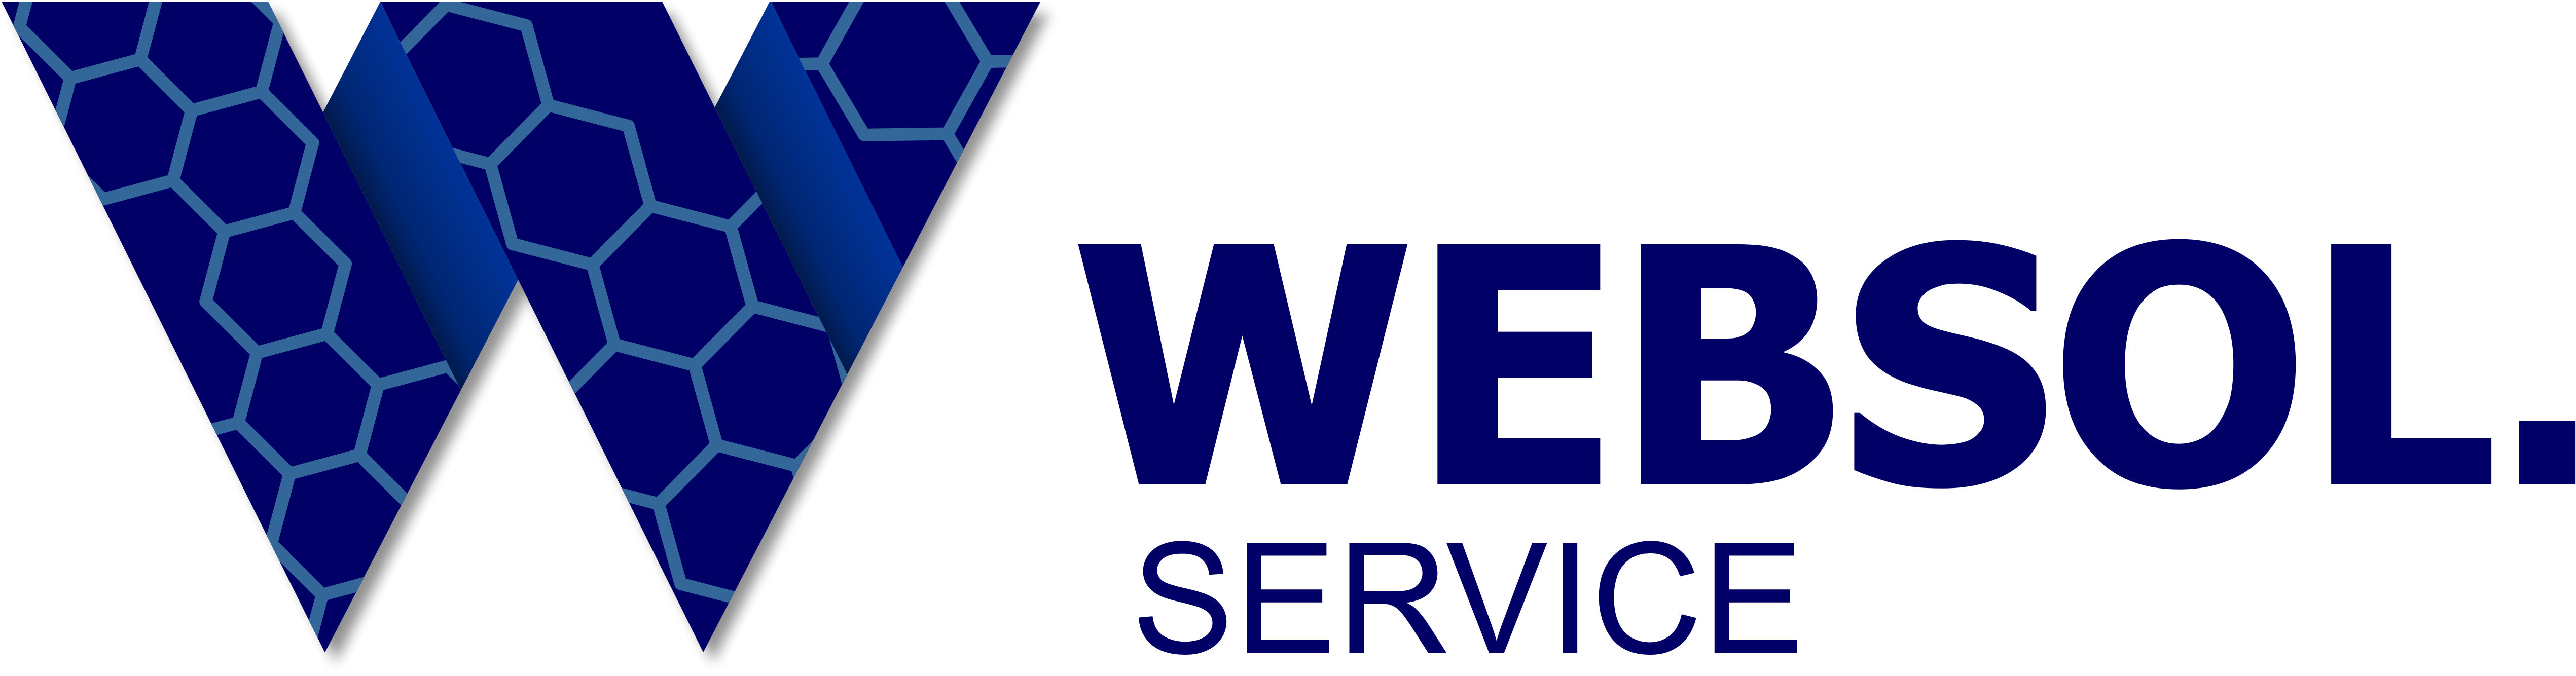 Websol logo 4